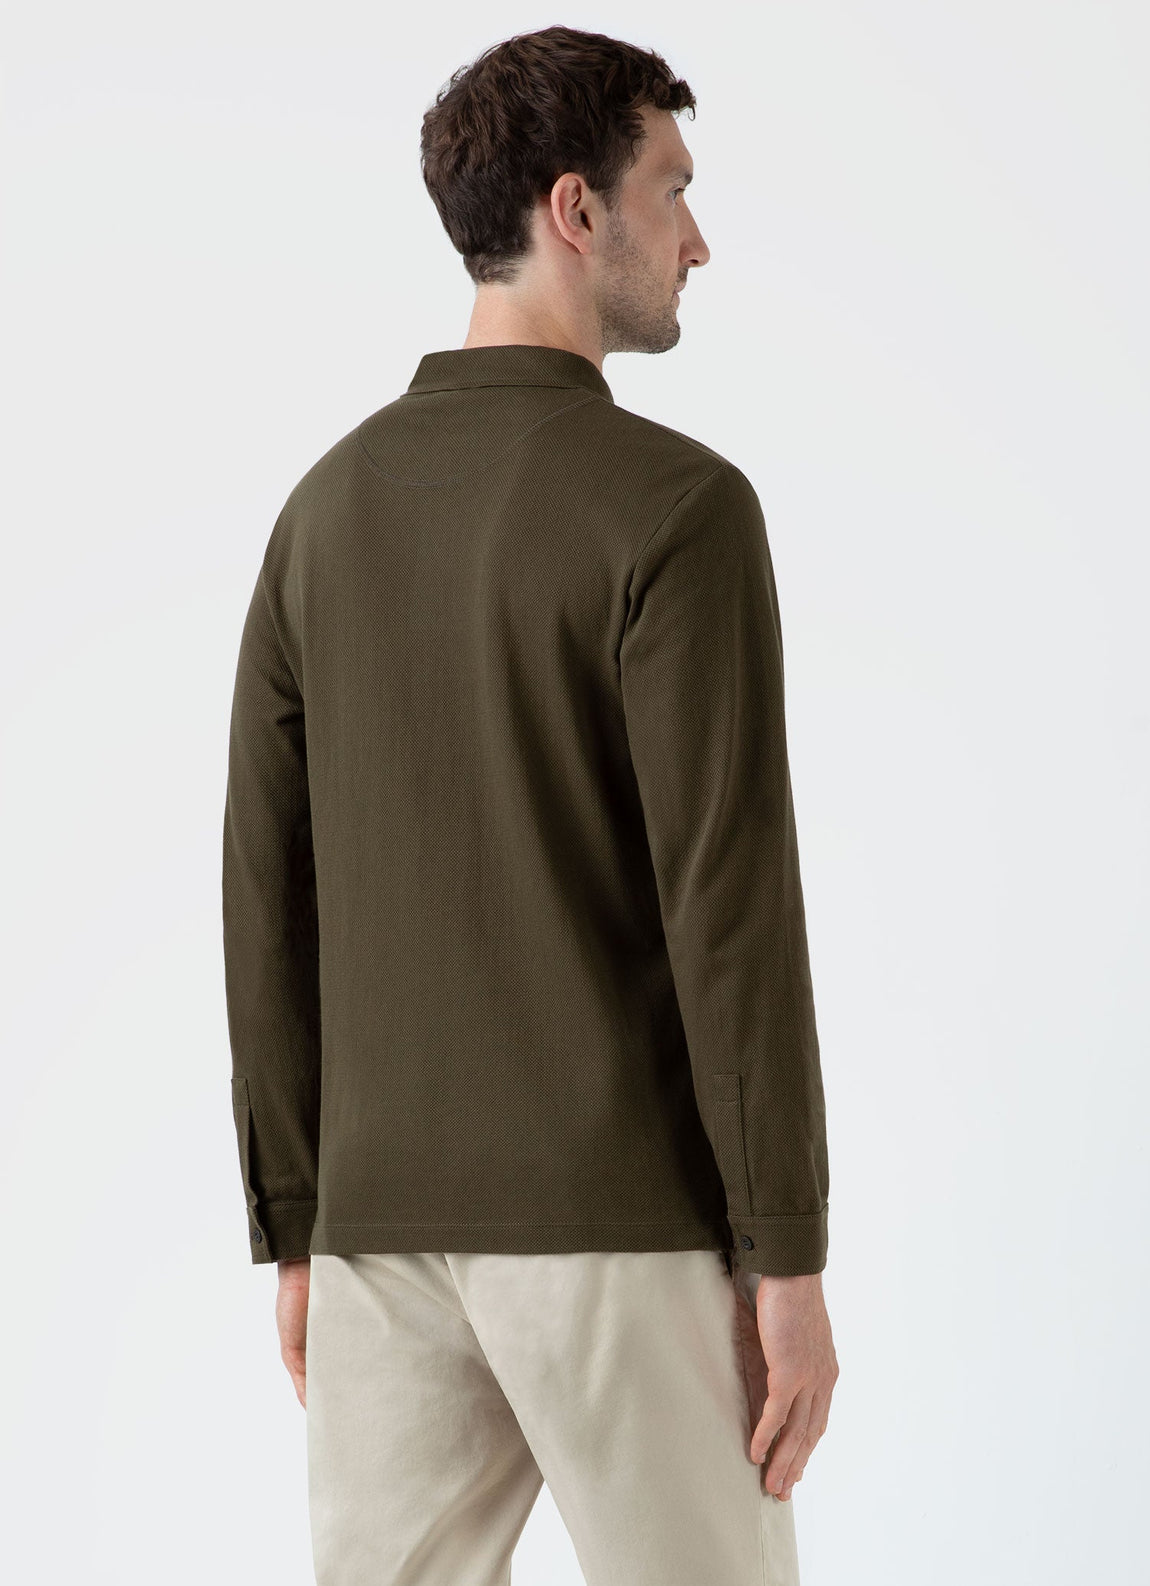 Men's Long Sleeve Riviera Polo Shirt in Dark Olive | Sunspel